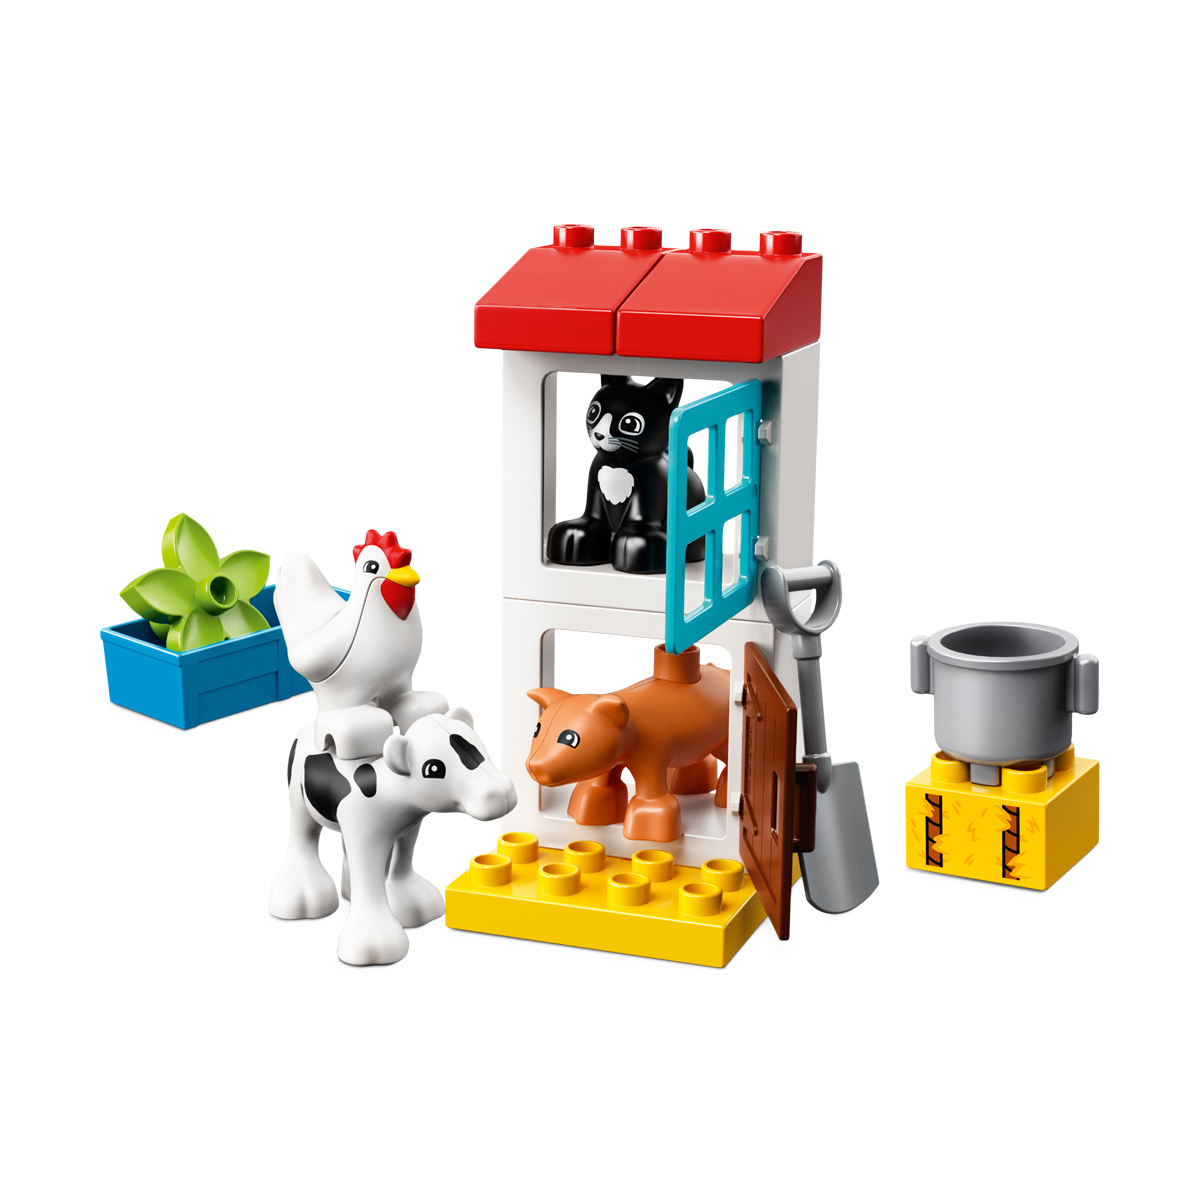 LEGO DUPLO Farm Animals - 10870 | Kmart